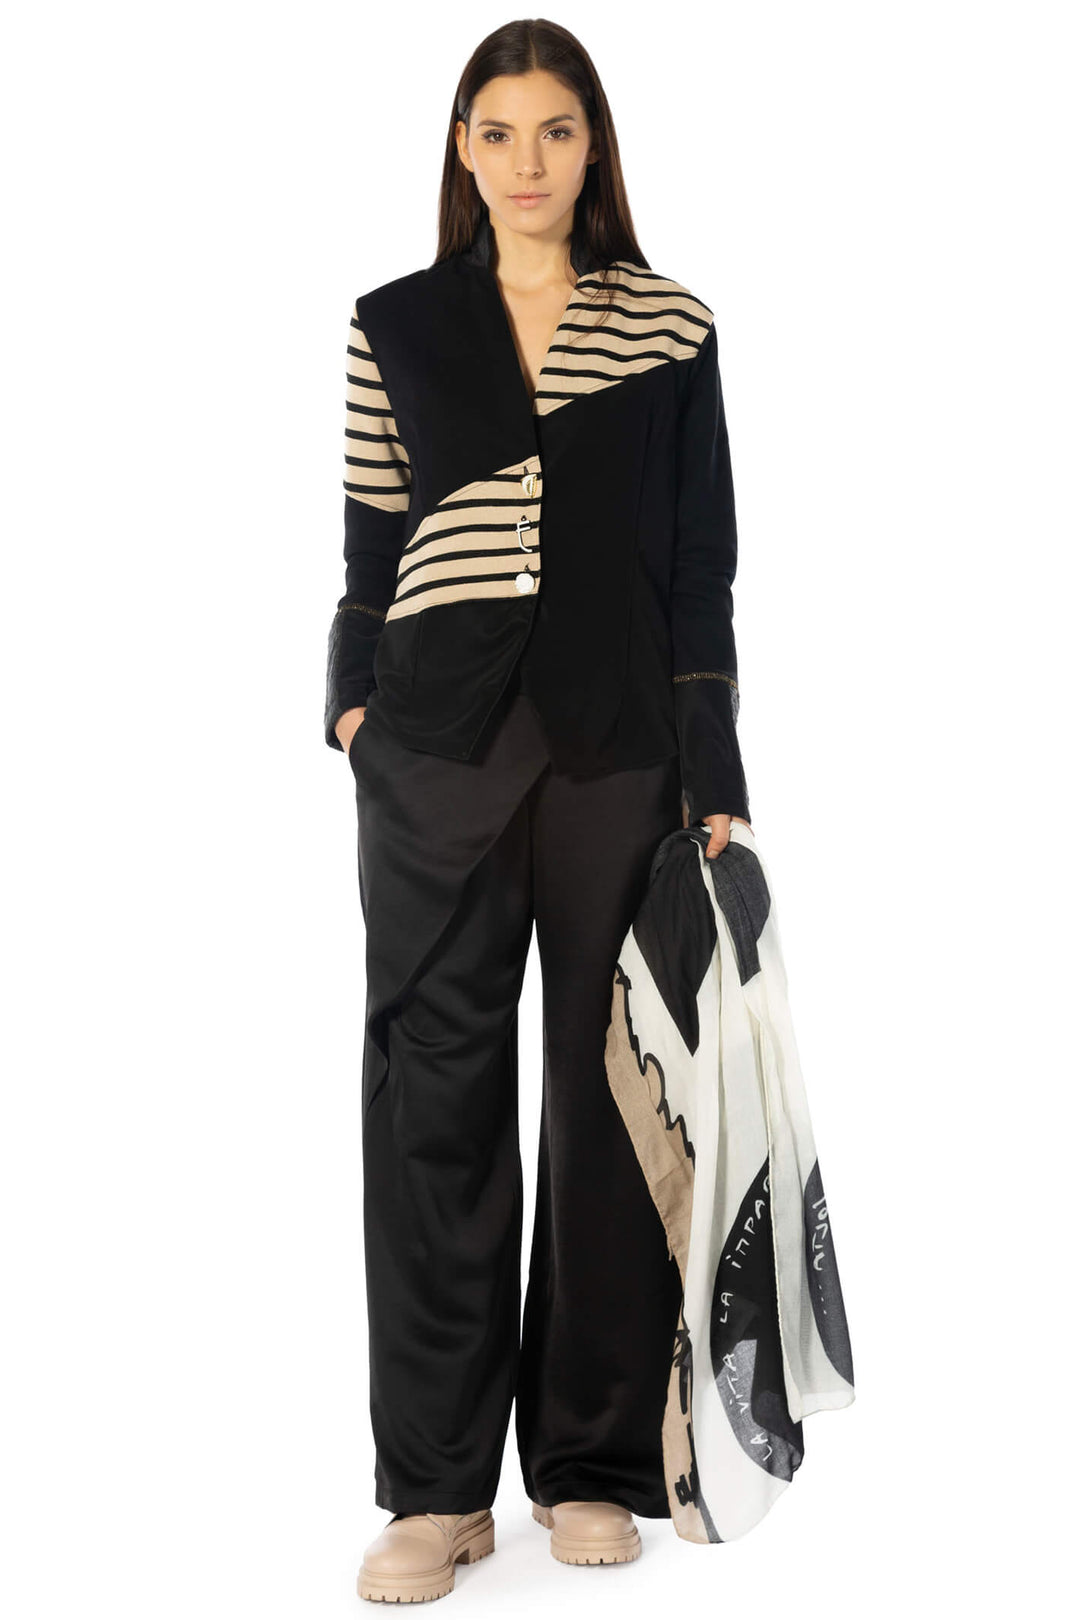 Elisa Cavaletti ELW237002810 Black Stripe Jacket - Experience Boutique